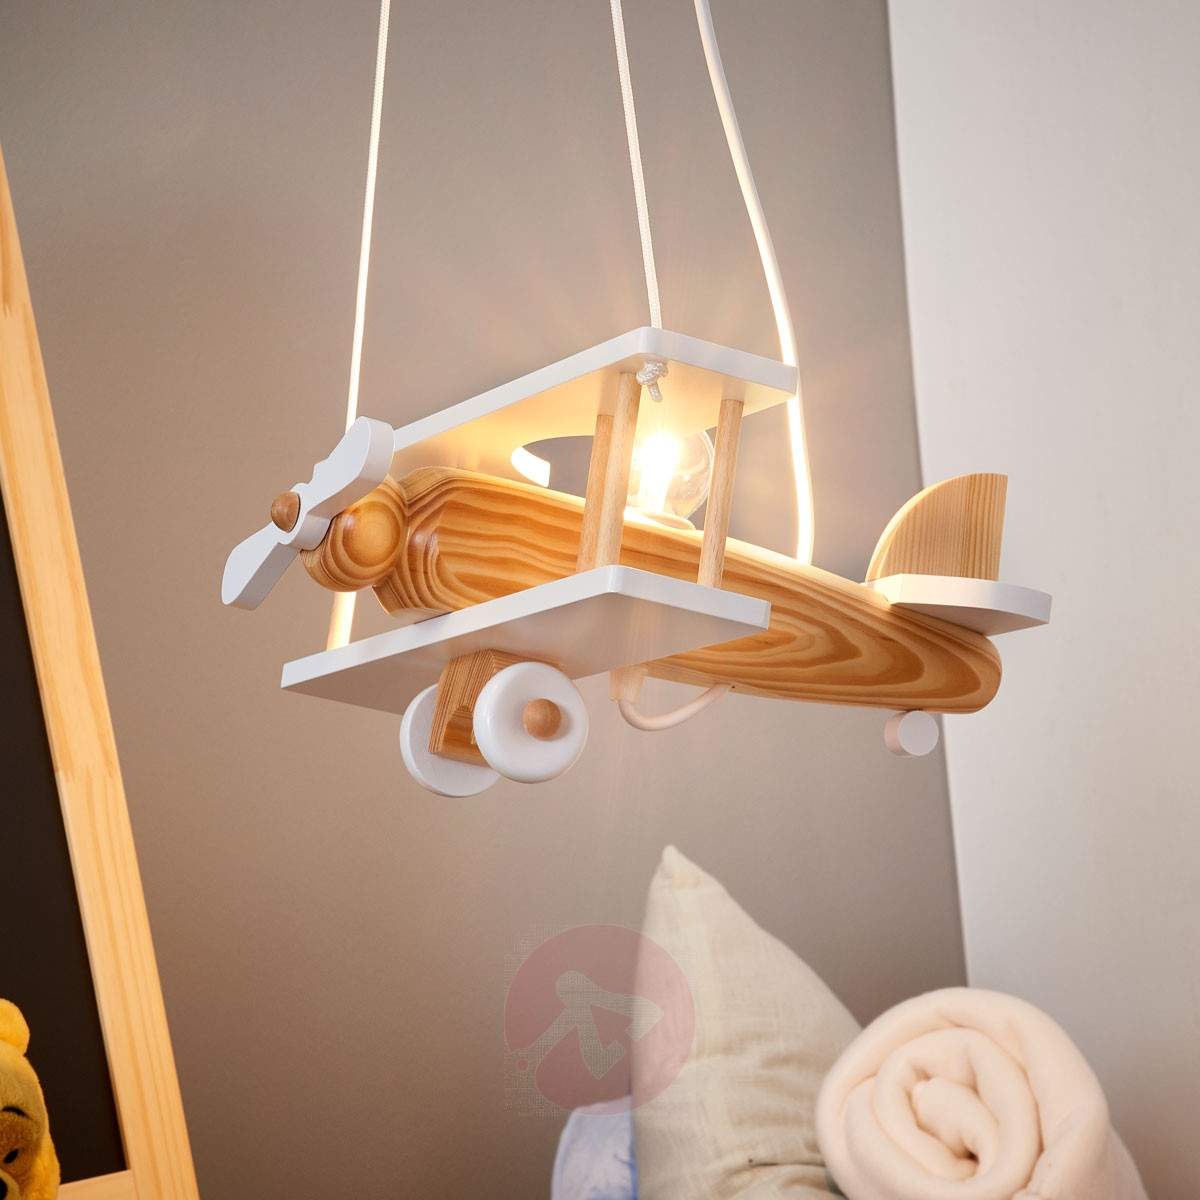 Wooden Aeroplane Ceiling Lightaeroplane pendant light white wooden elements lightscouk